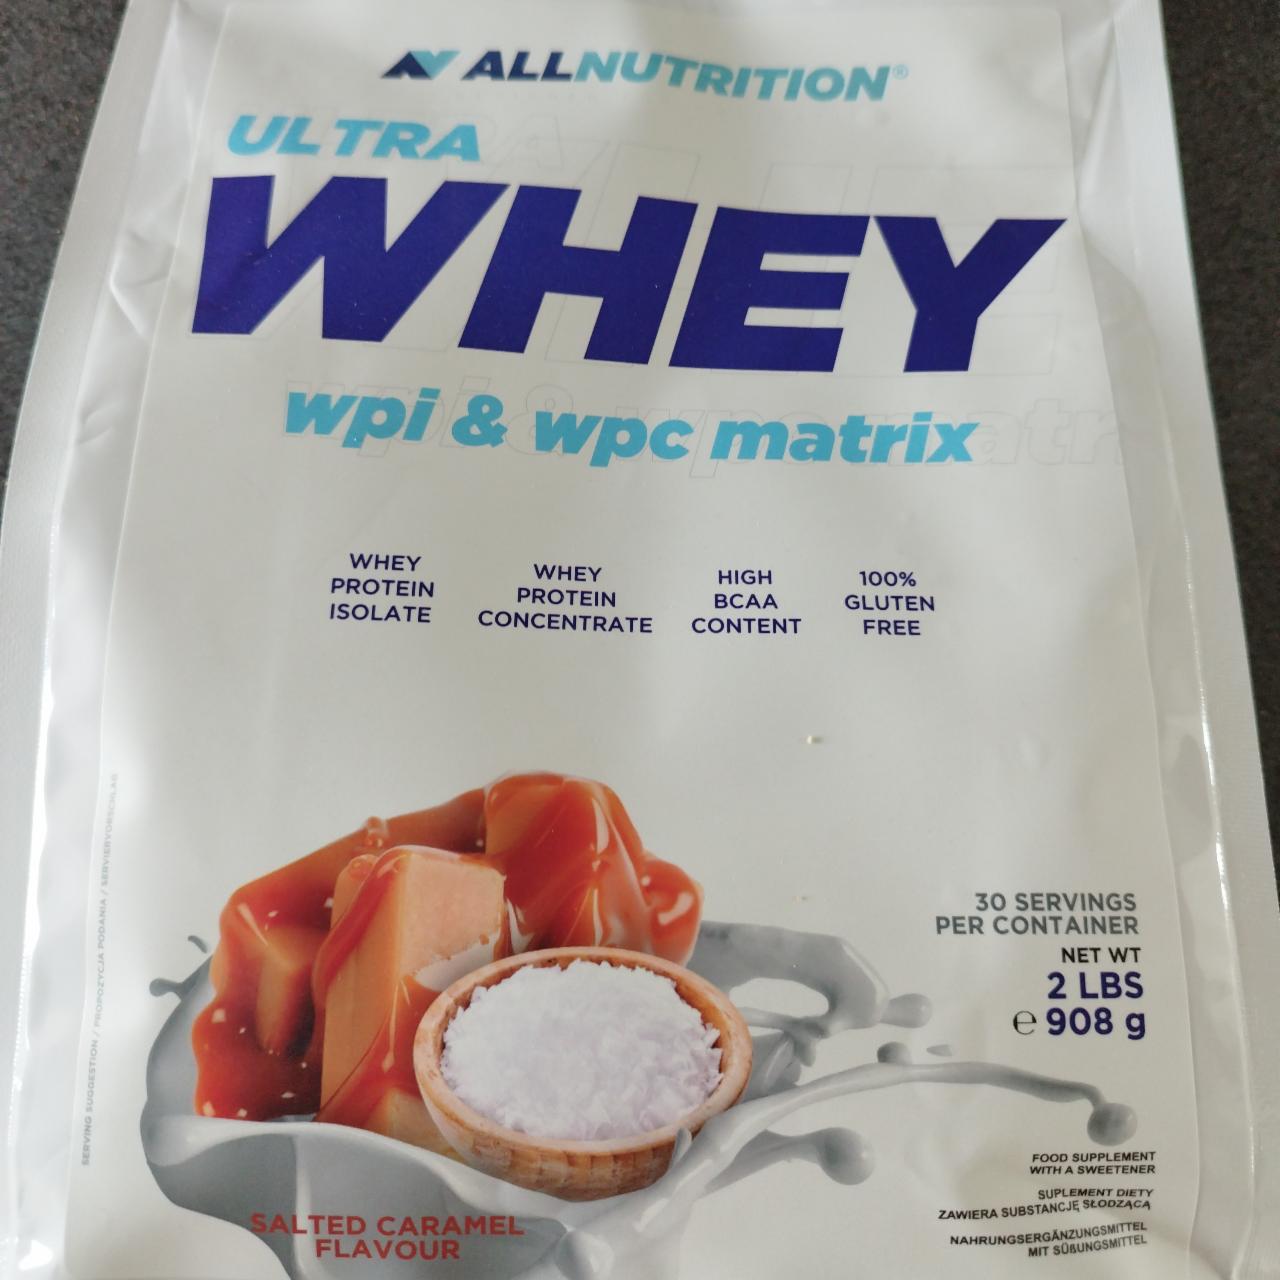 Fotografie - Ultra Whey wpi & wpc matrix Salted caramel flavour